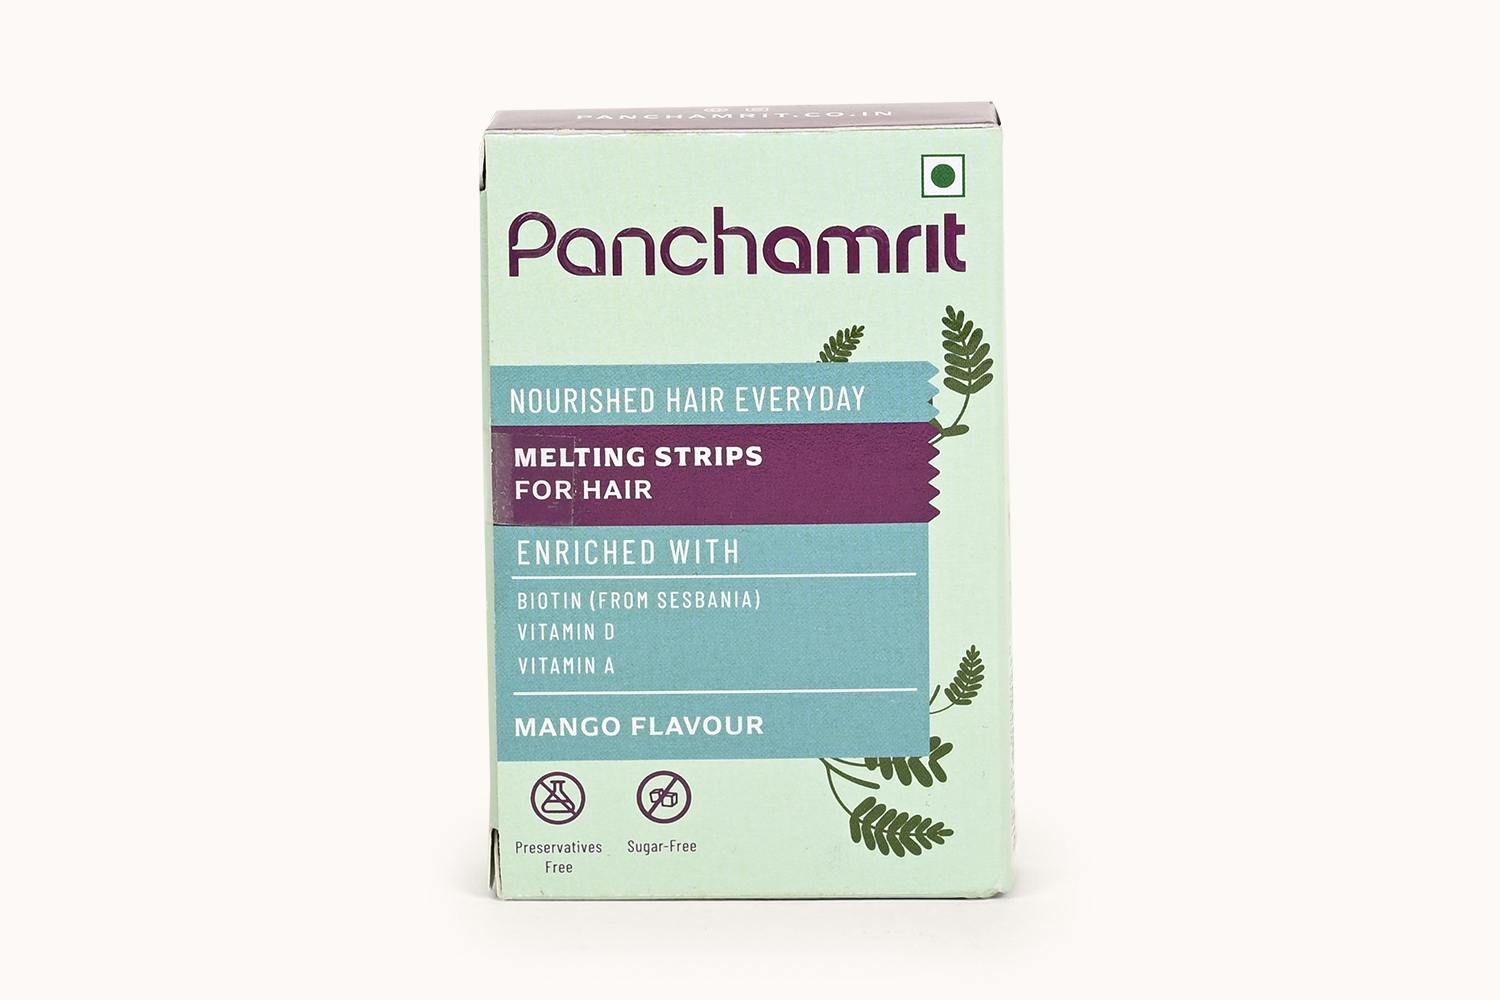 Panchamrit Melting Strip for Hair - Mango Flavour